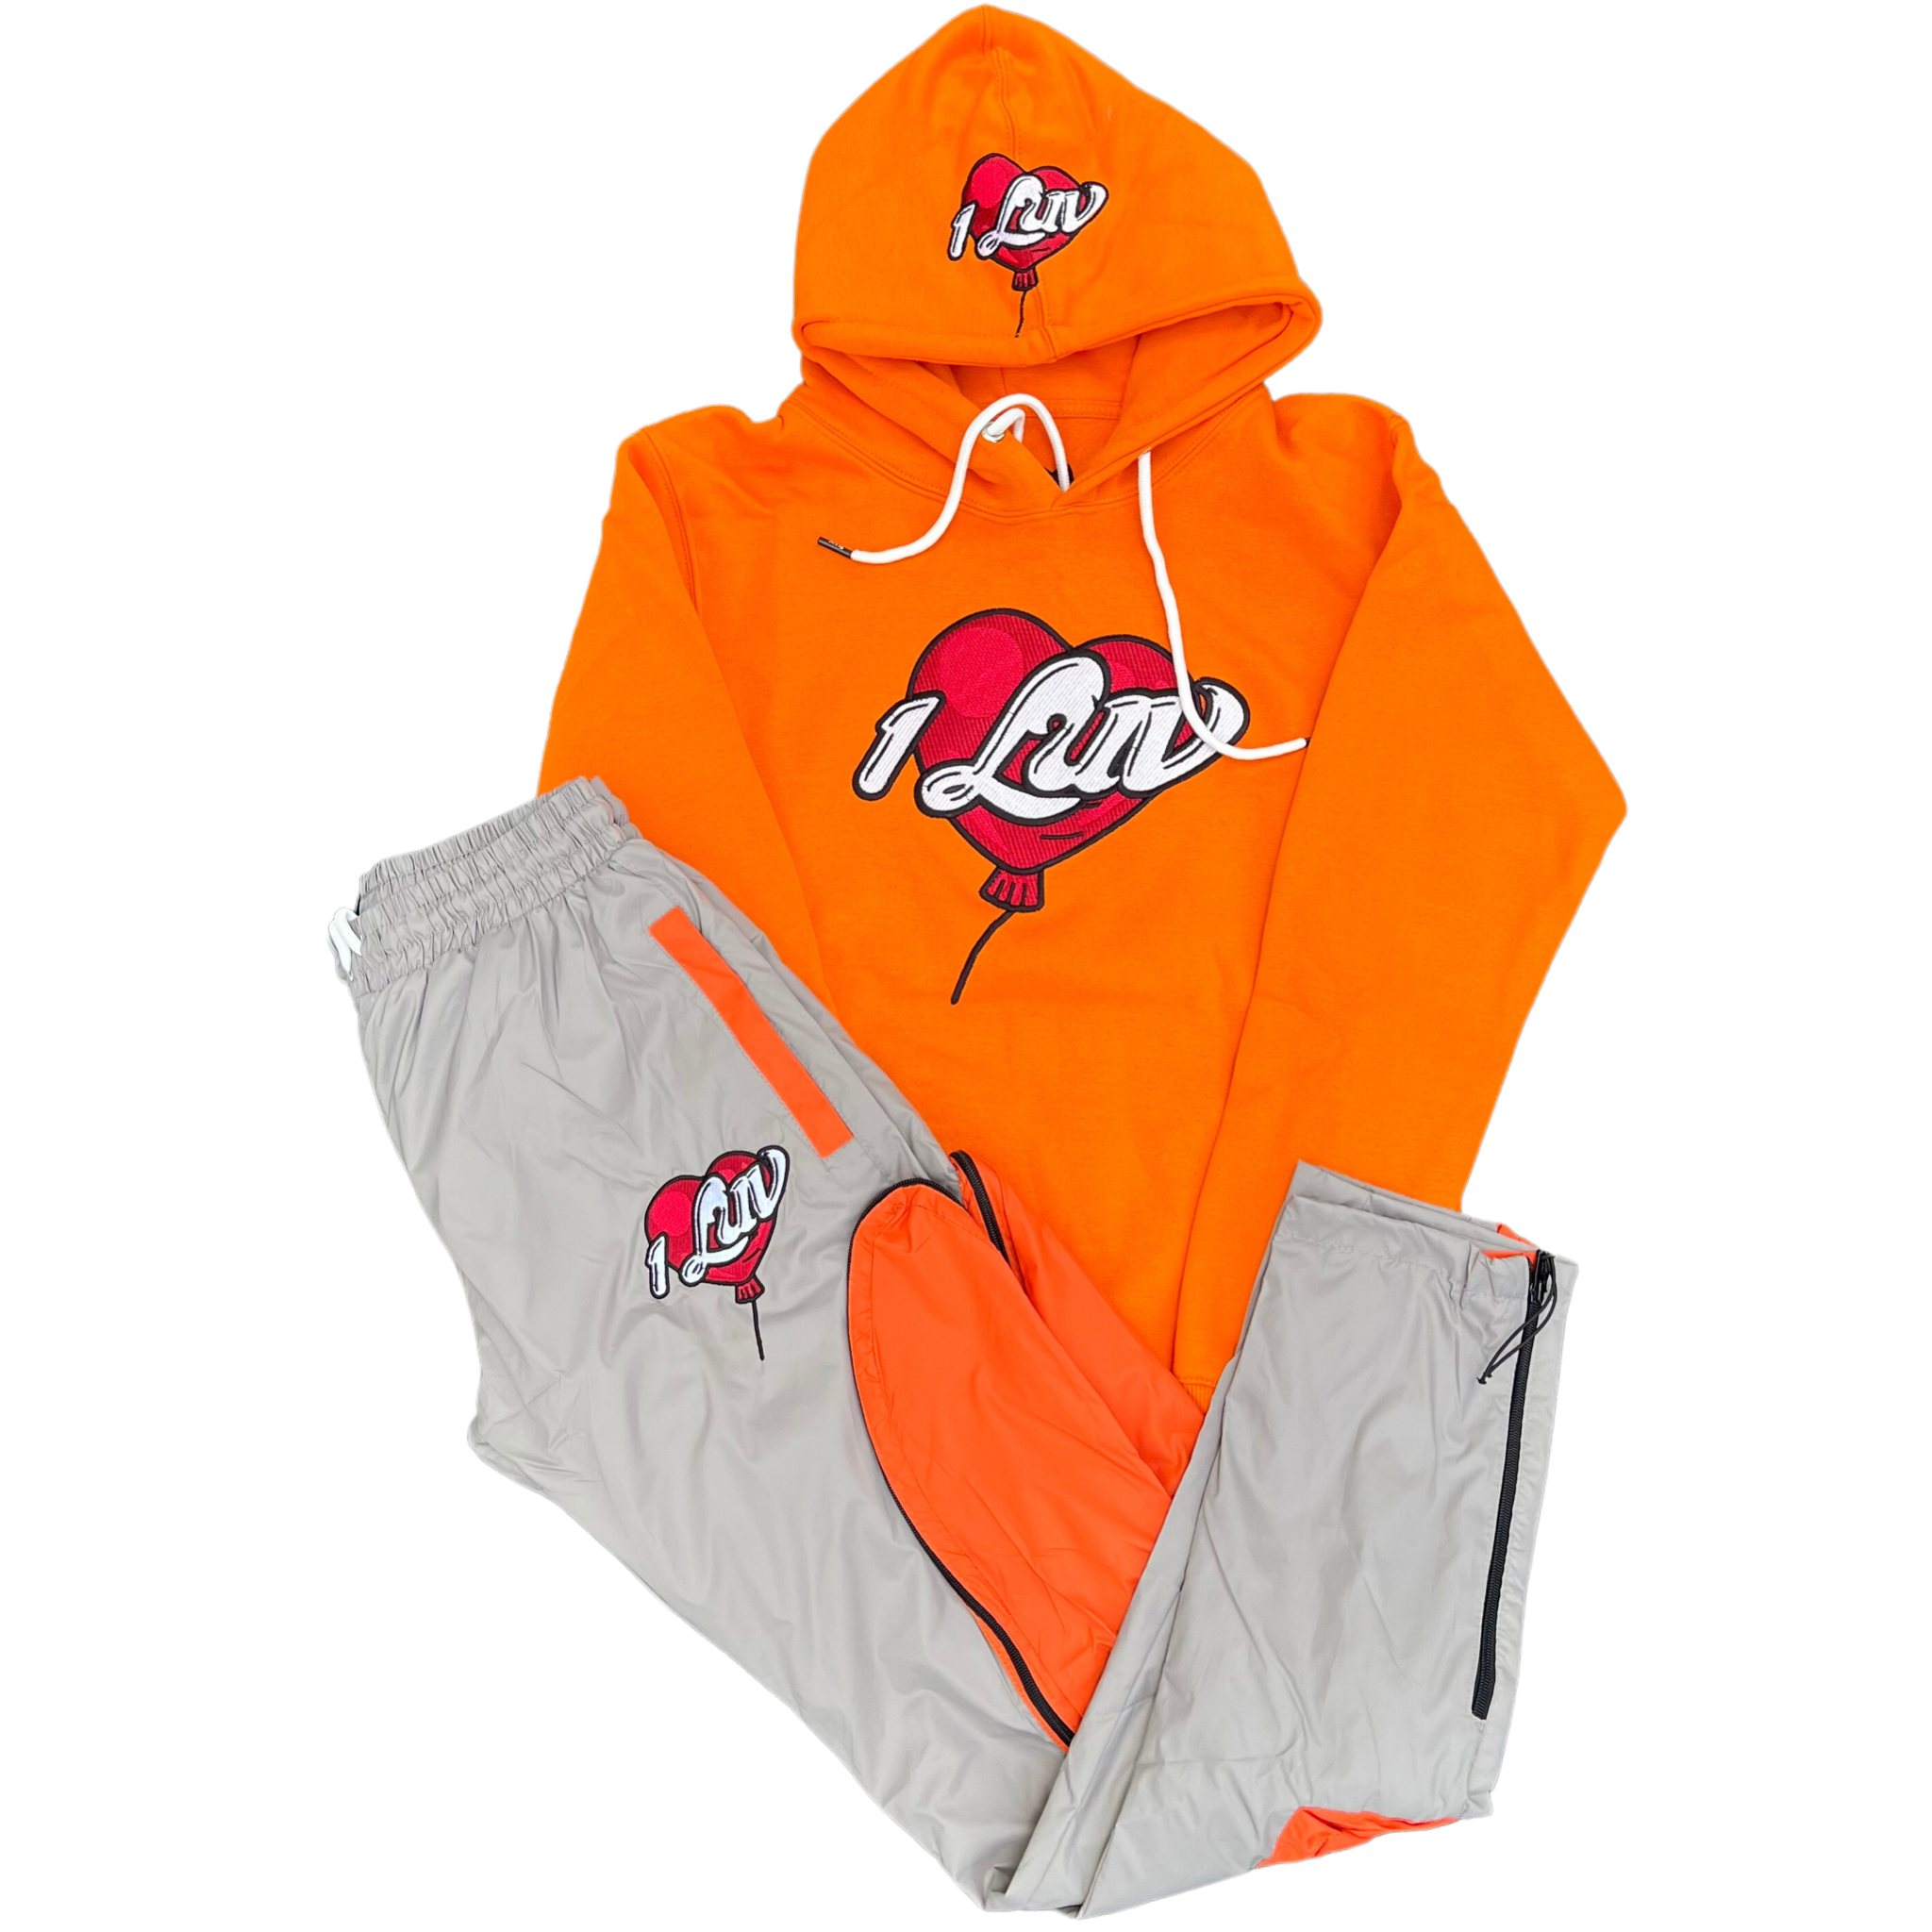 1Luv “Orange & Gray" Windbreaker Suit